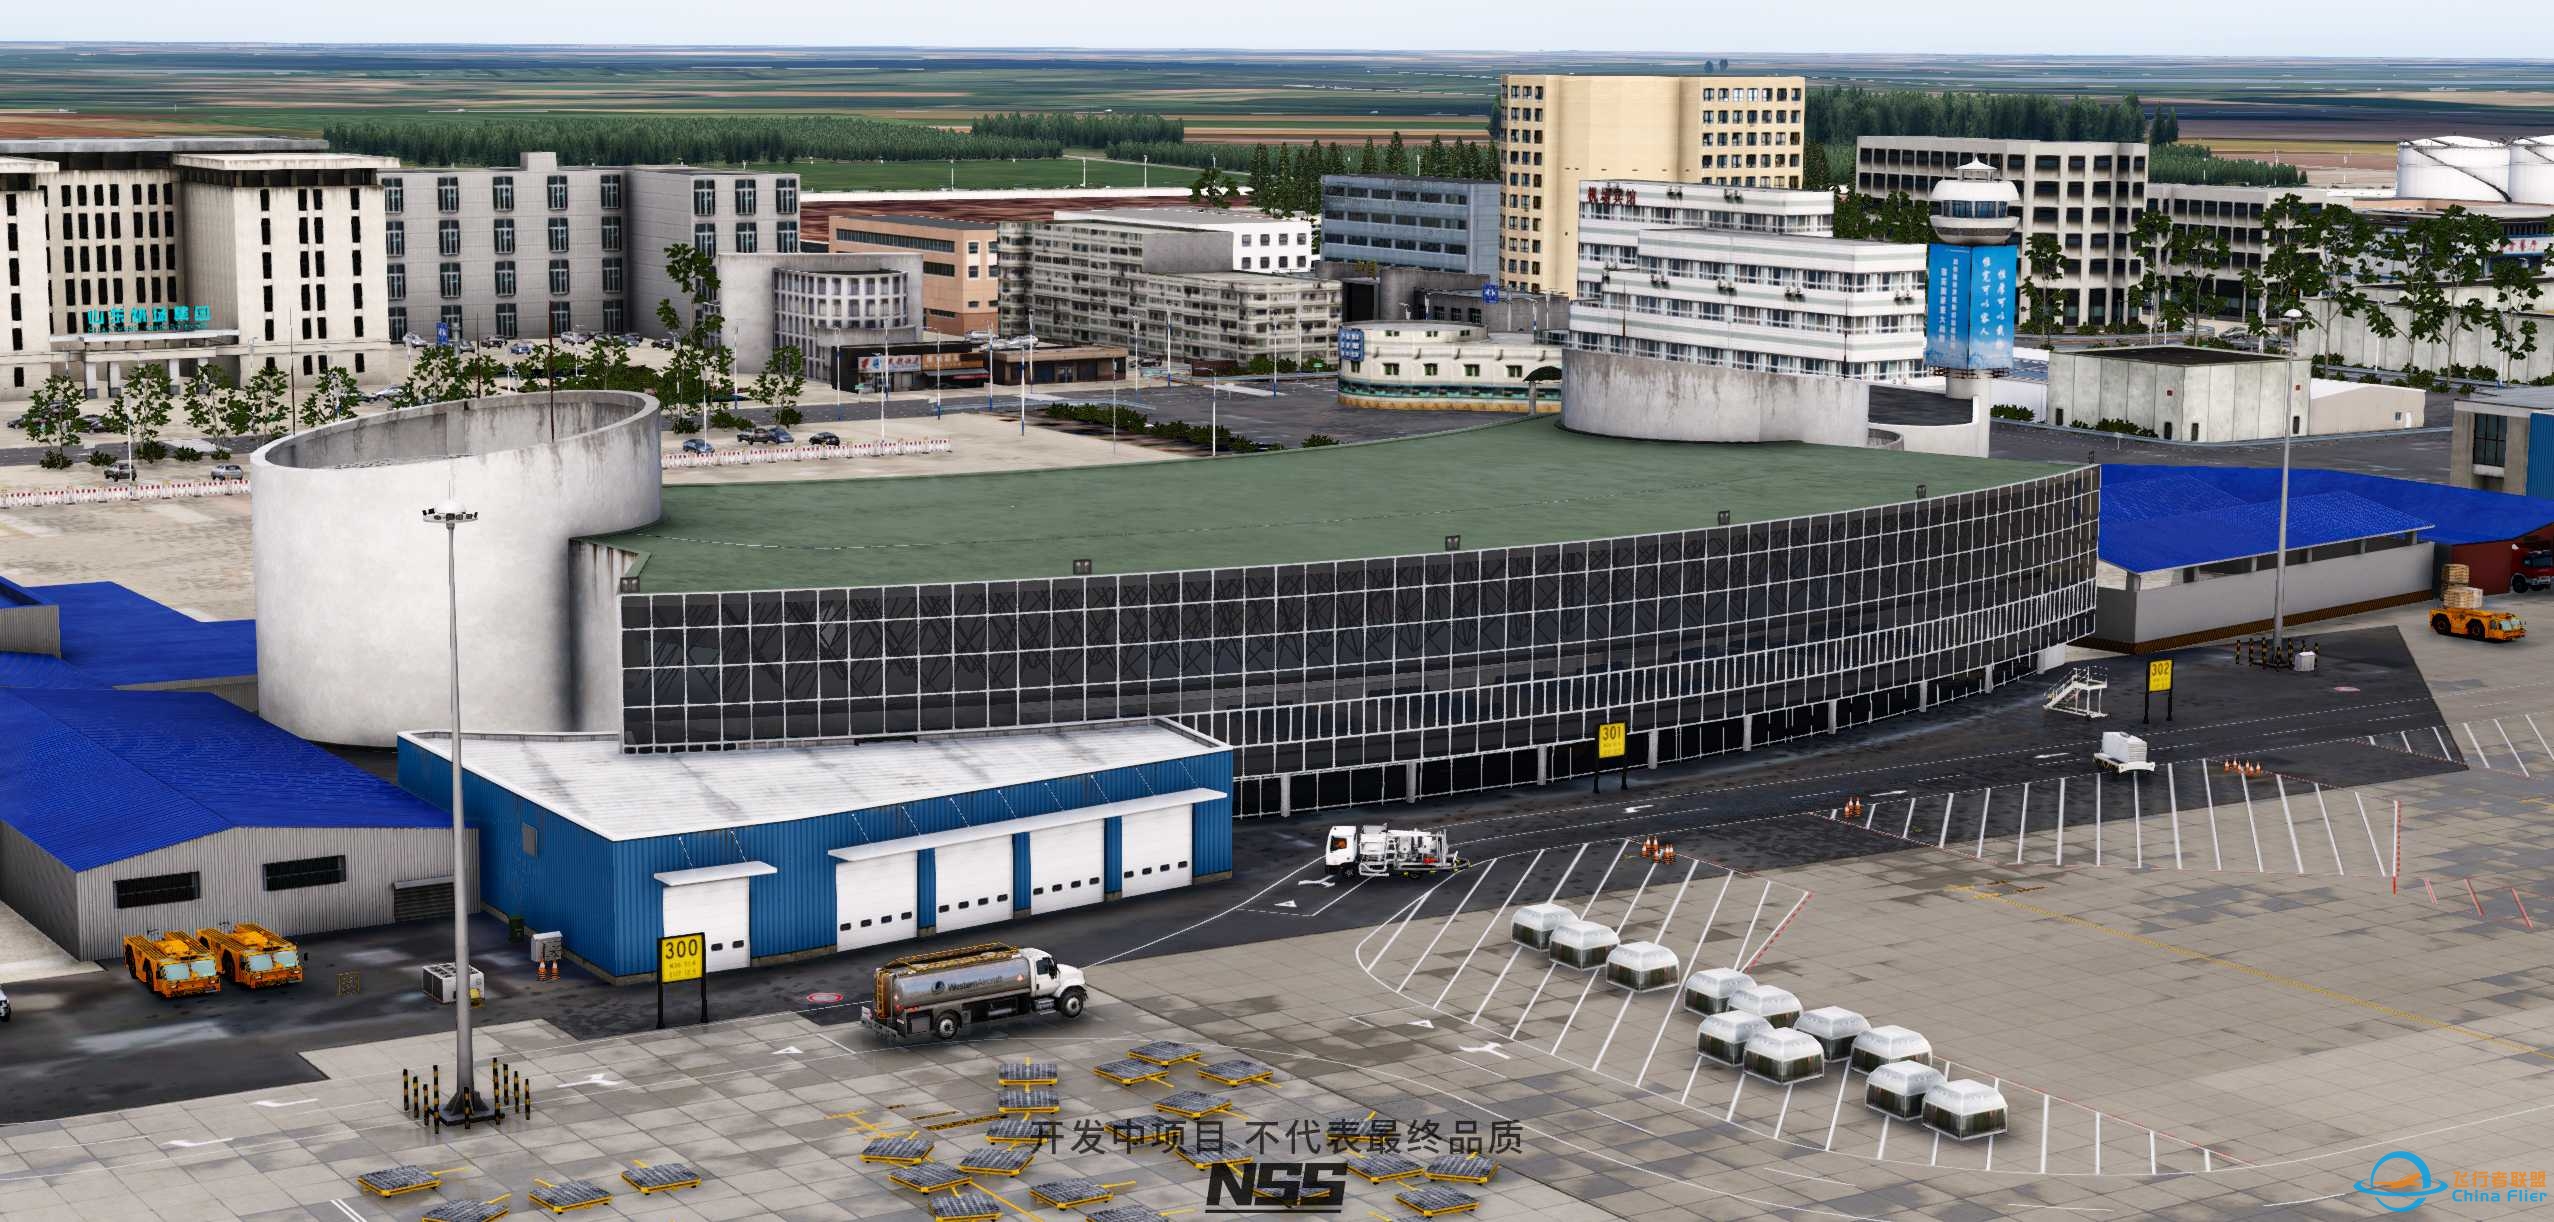 NSS地景开发组 ZSJN 济南遥墙国际机场项目预览 兼公布-9874 